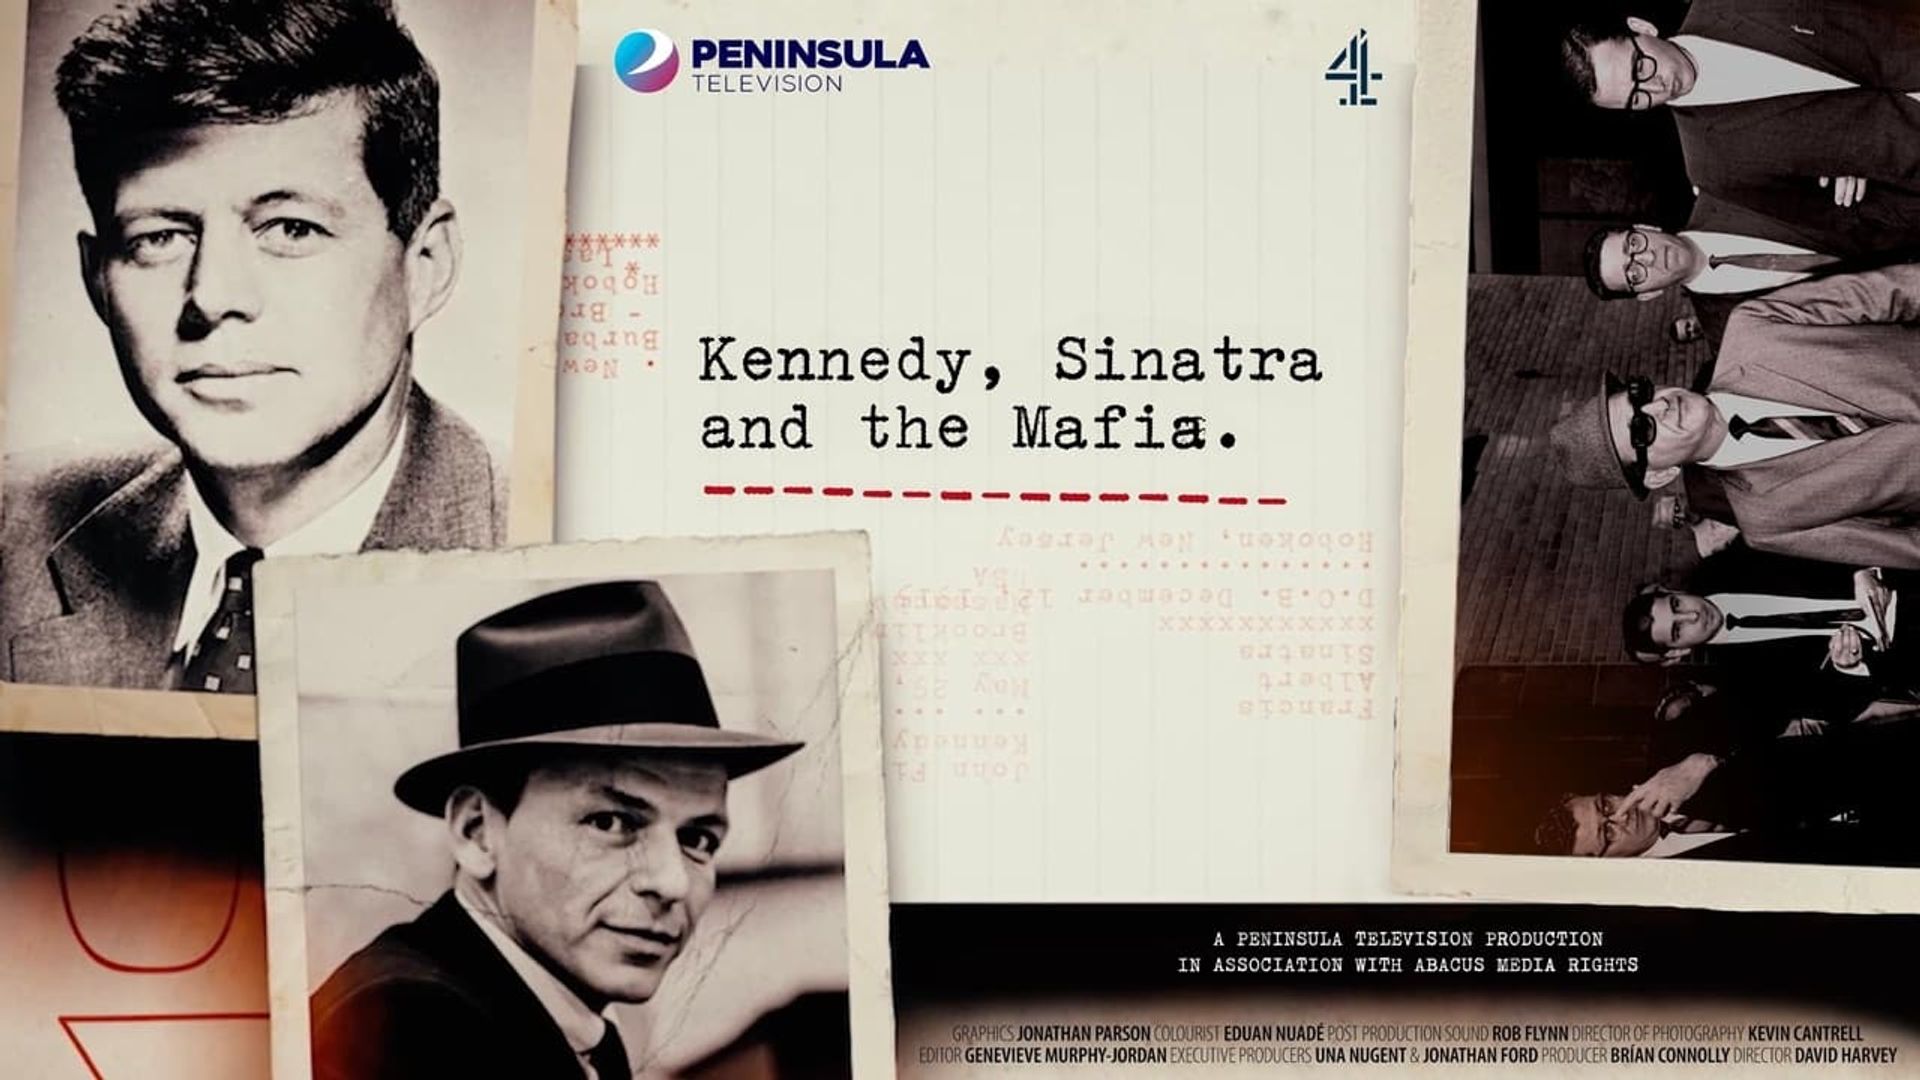 Kennedy, Sinatra and the Mafia background